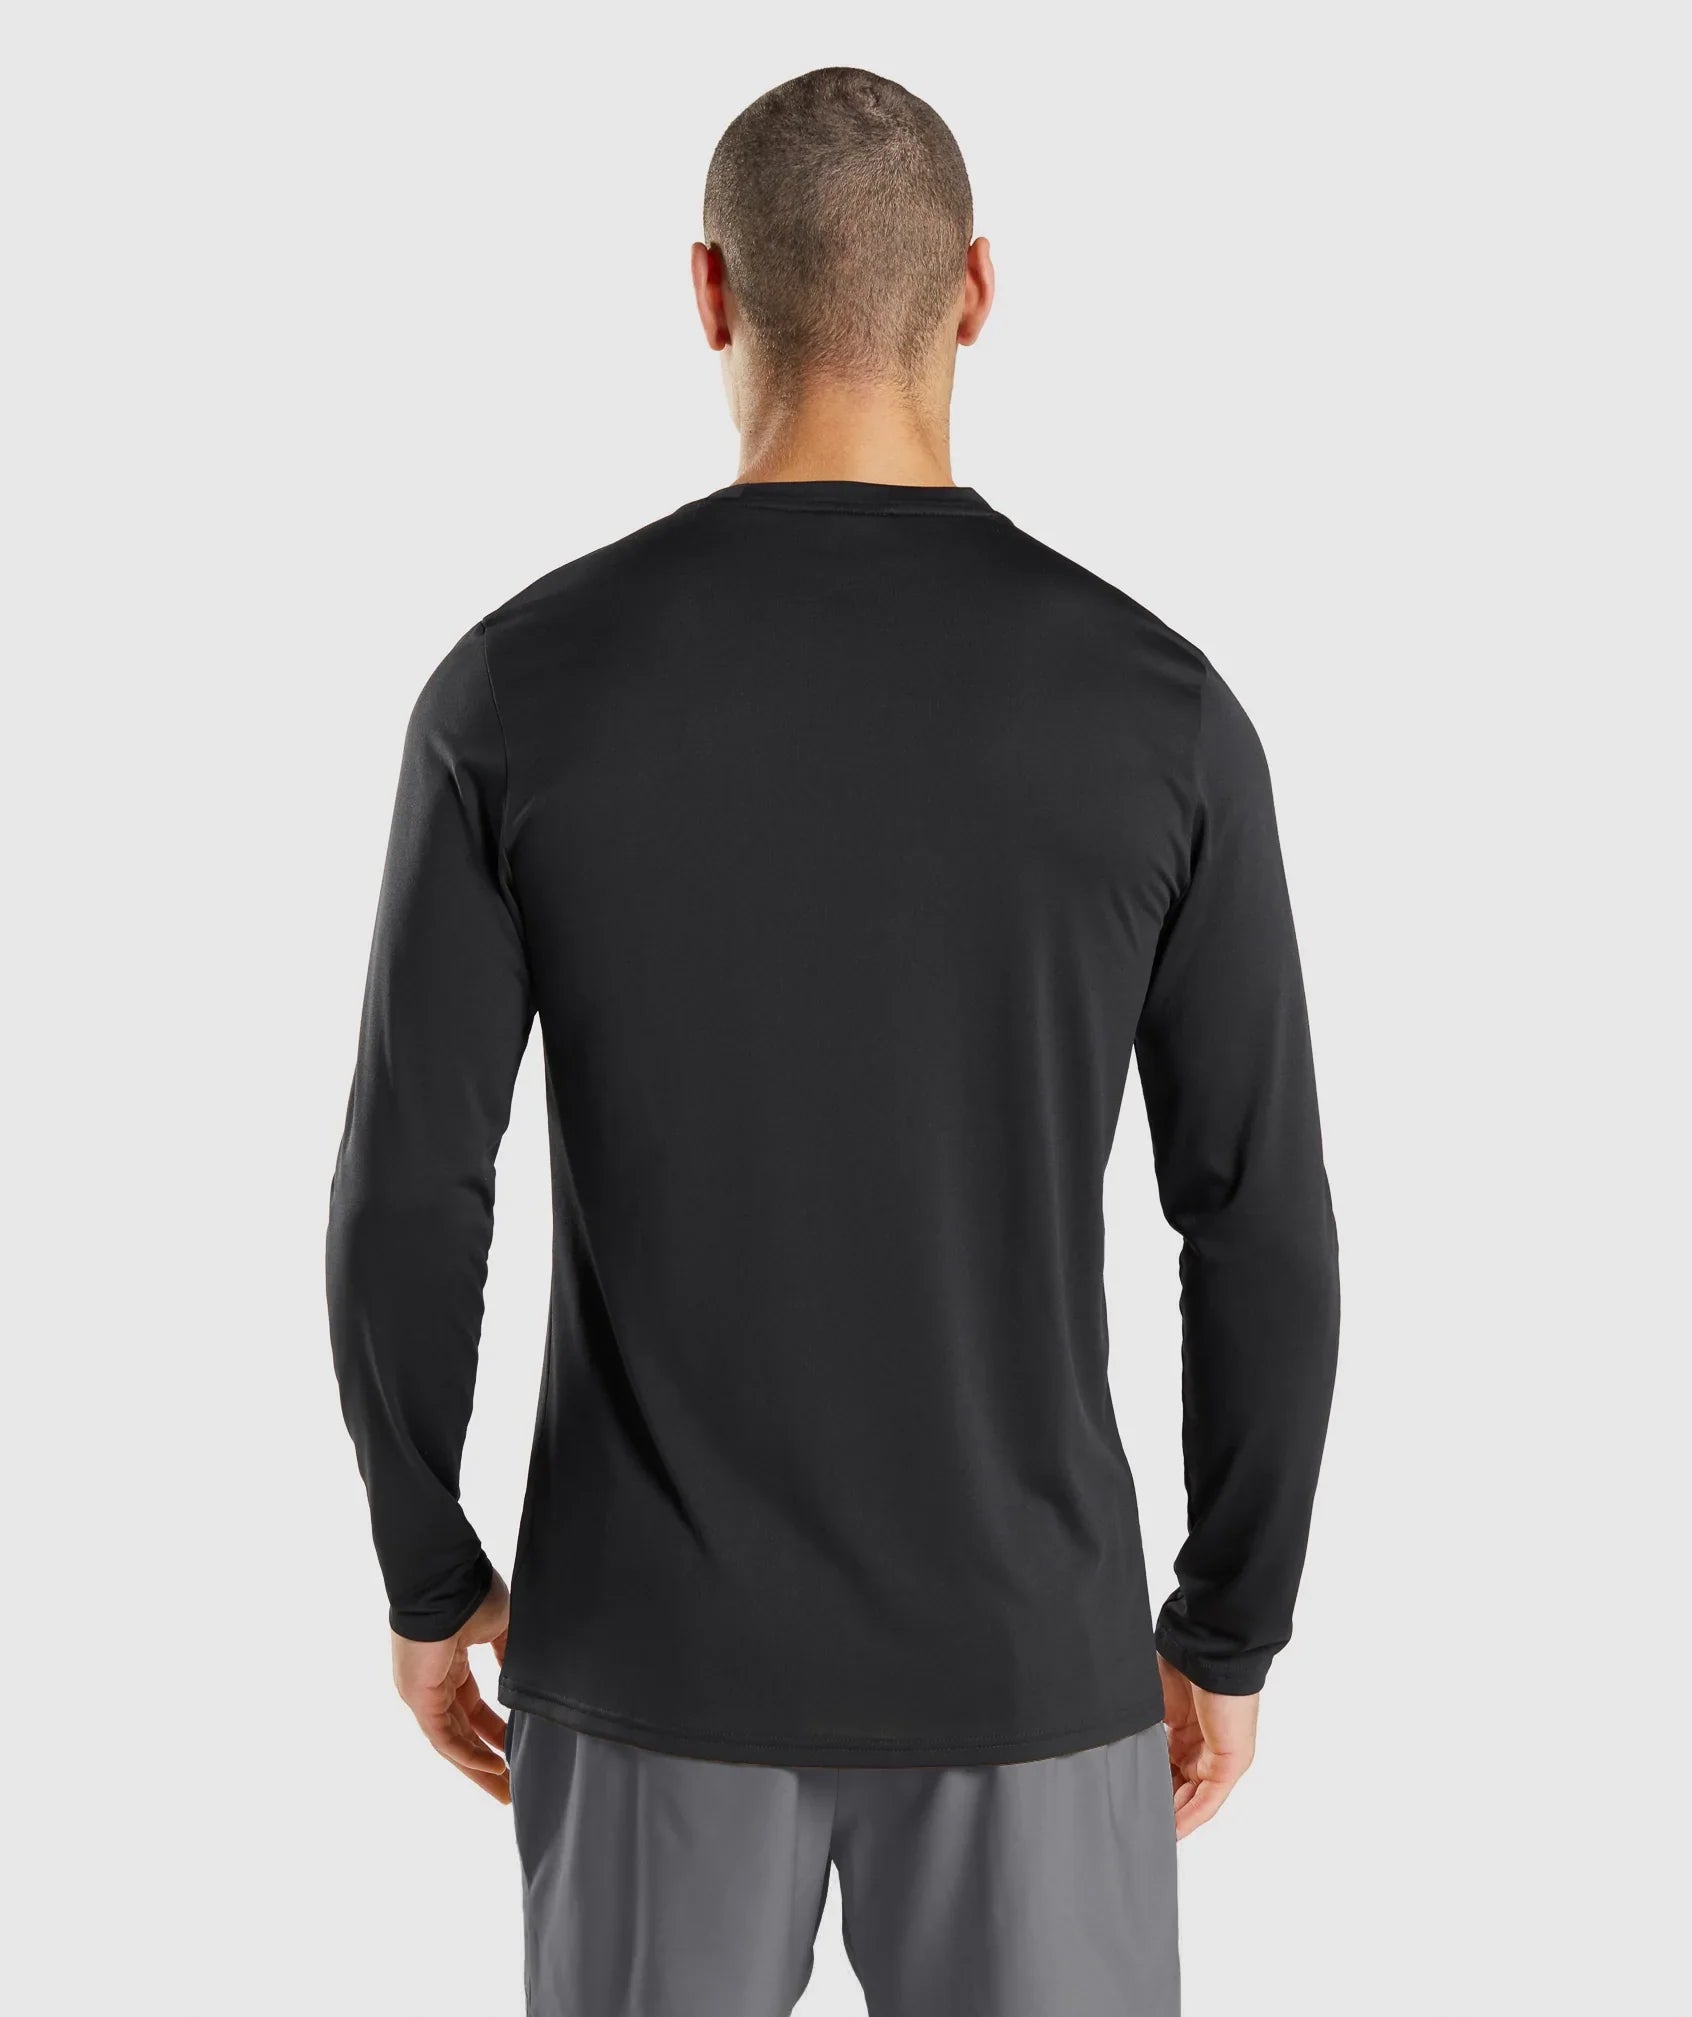 Gymshark Arrival Long Sleeve T-Shirt - Black